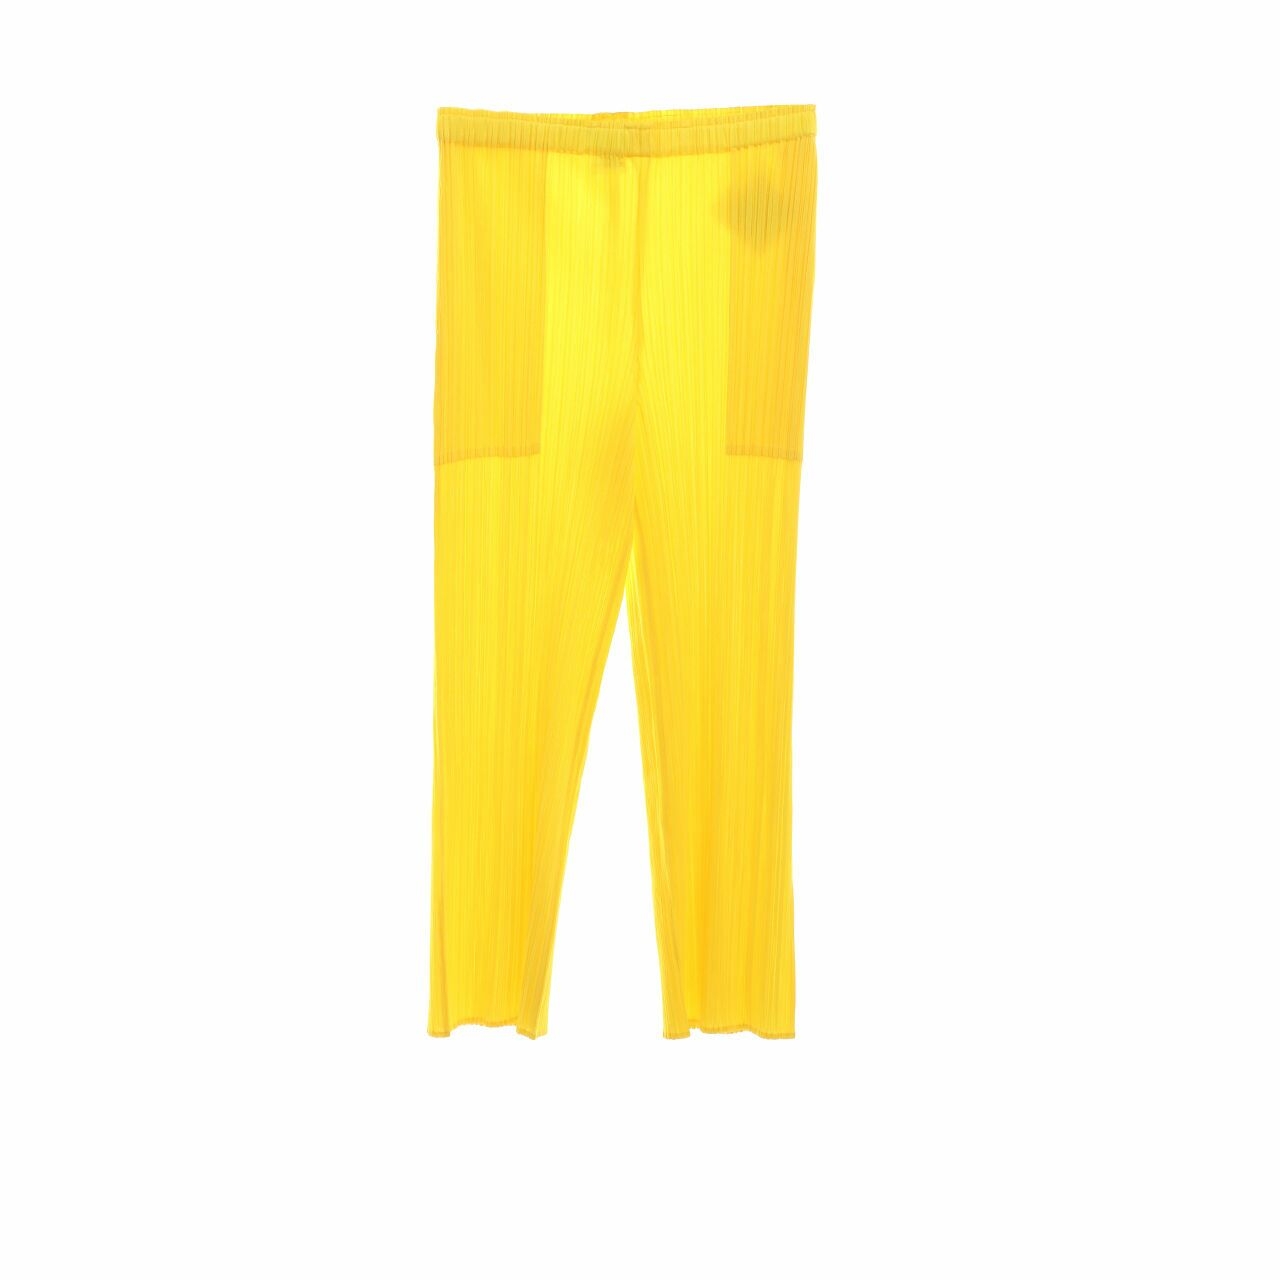 Pleats Please Yellow Long Pants